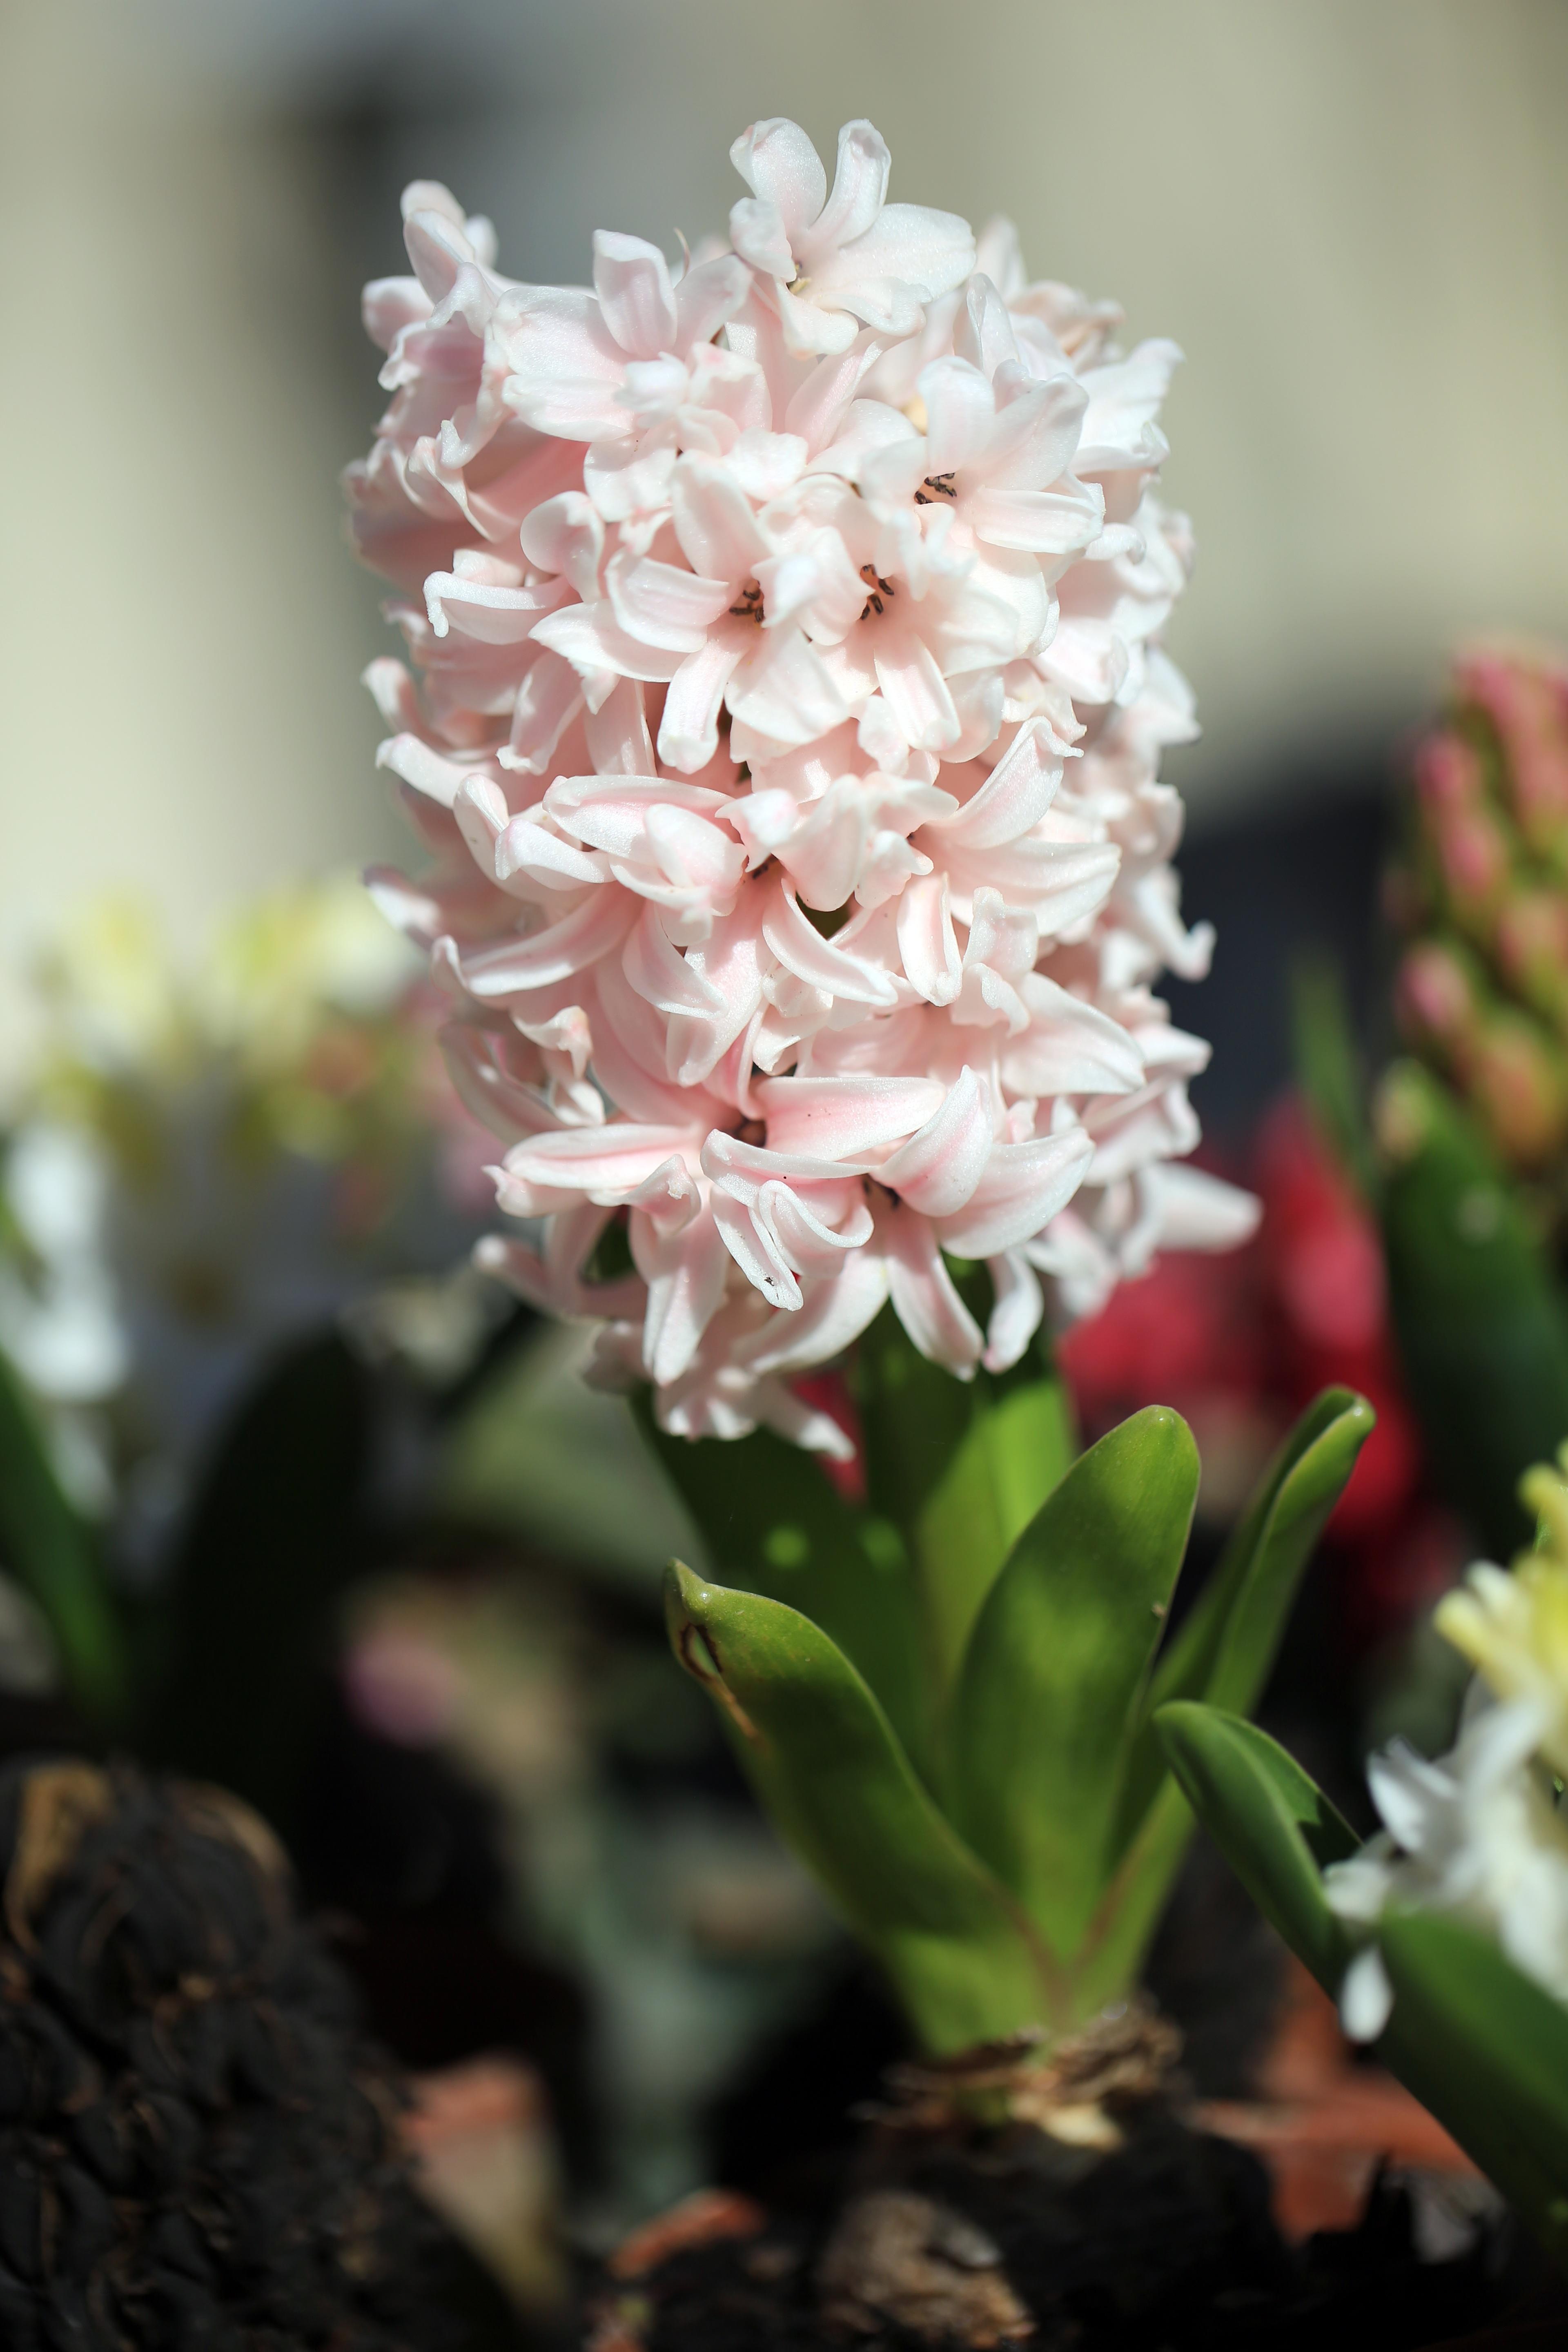 Hyacinth 'Pink Surprise' - Hyacinth from Leo Berbee Bulb Company